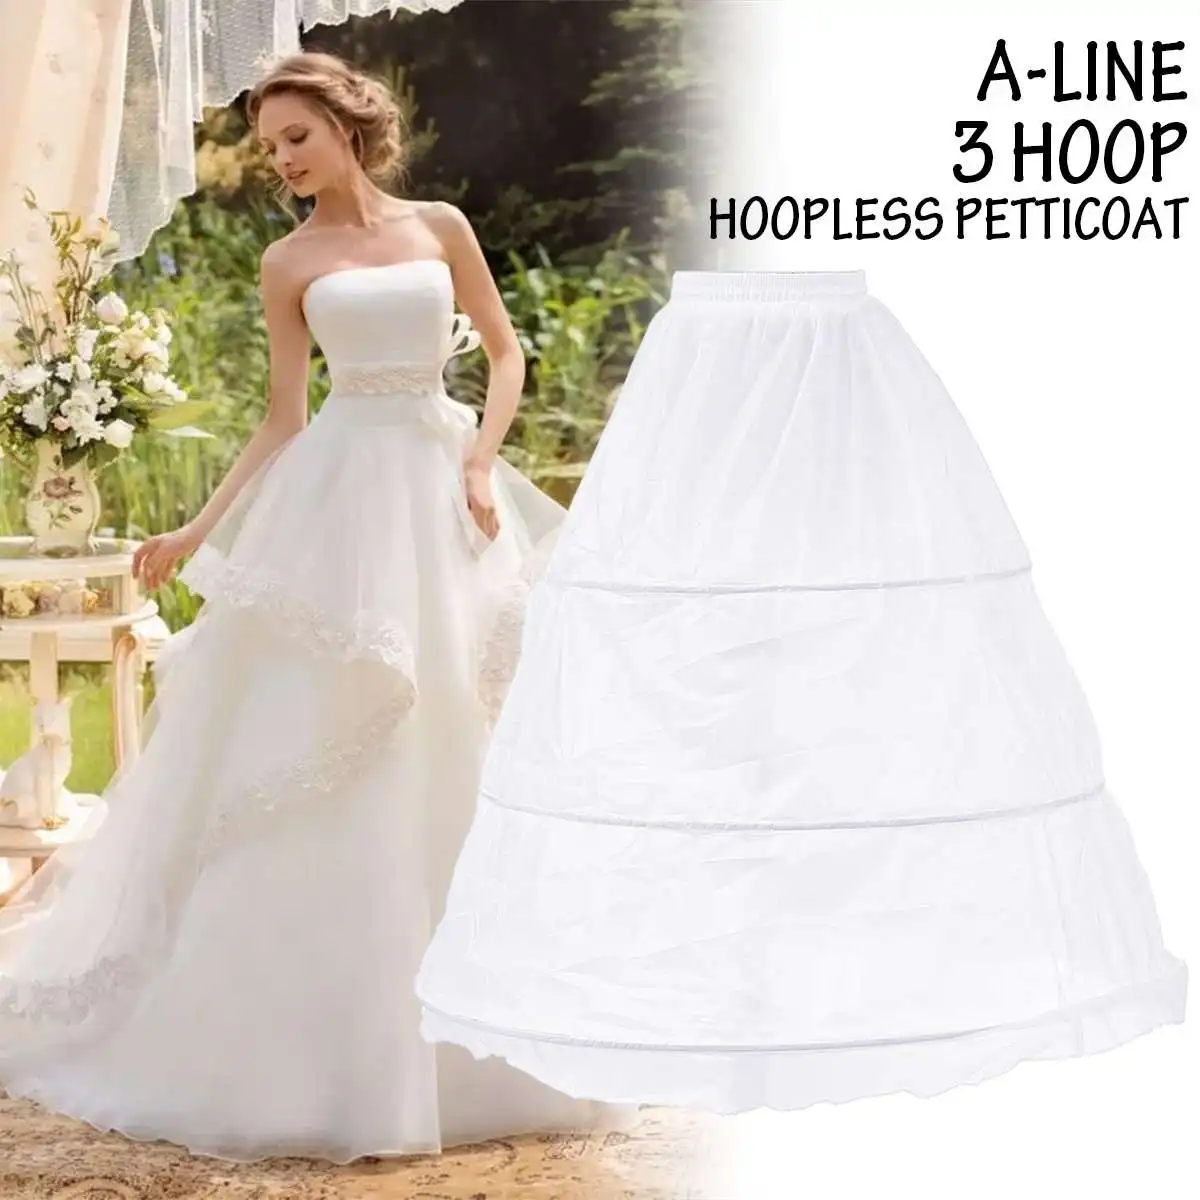 White A Line Hoop Long Petticoat Crinoline Ball Gown Skirt Underskirt Wedding Accessories Dress Slip Skirt Decor Prom Dress